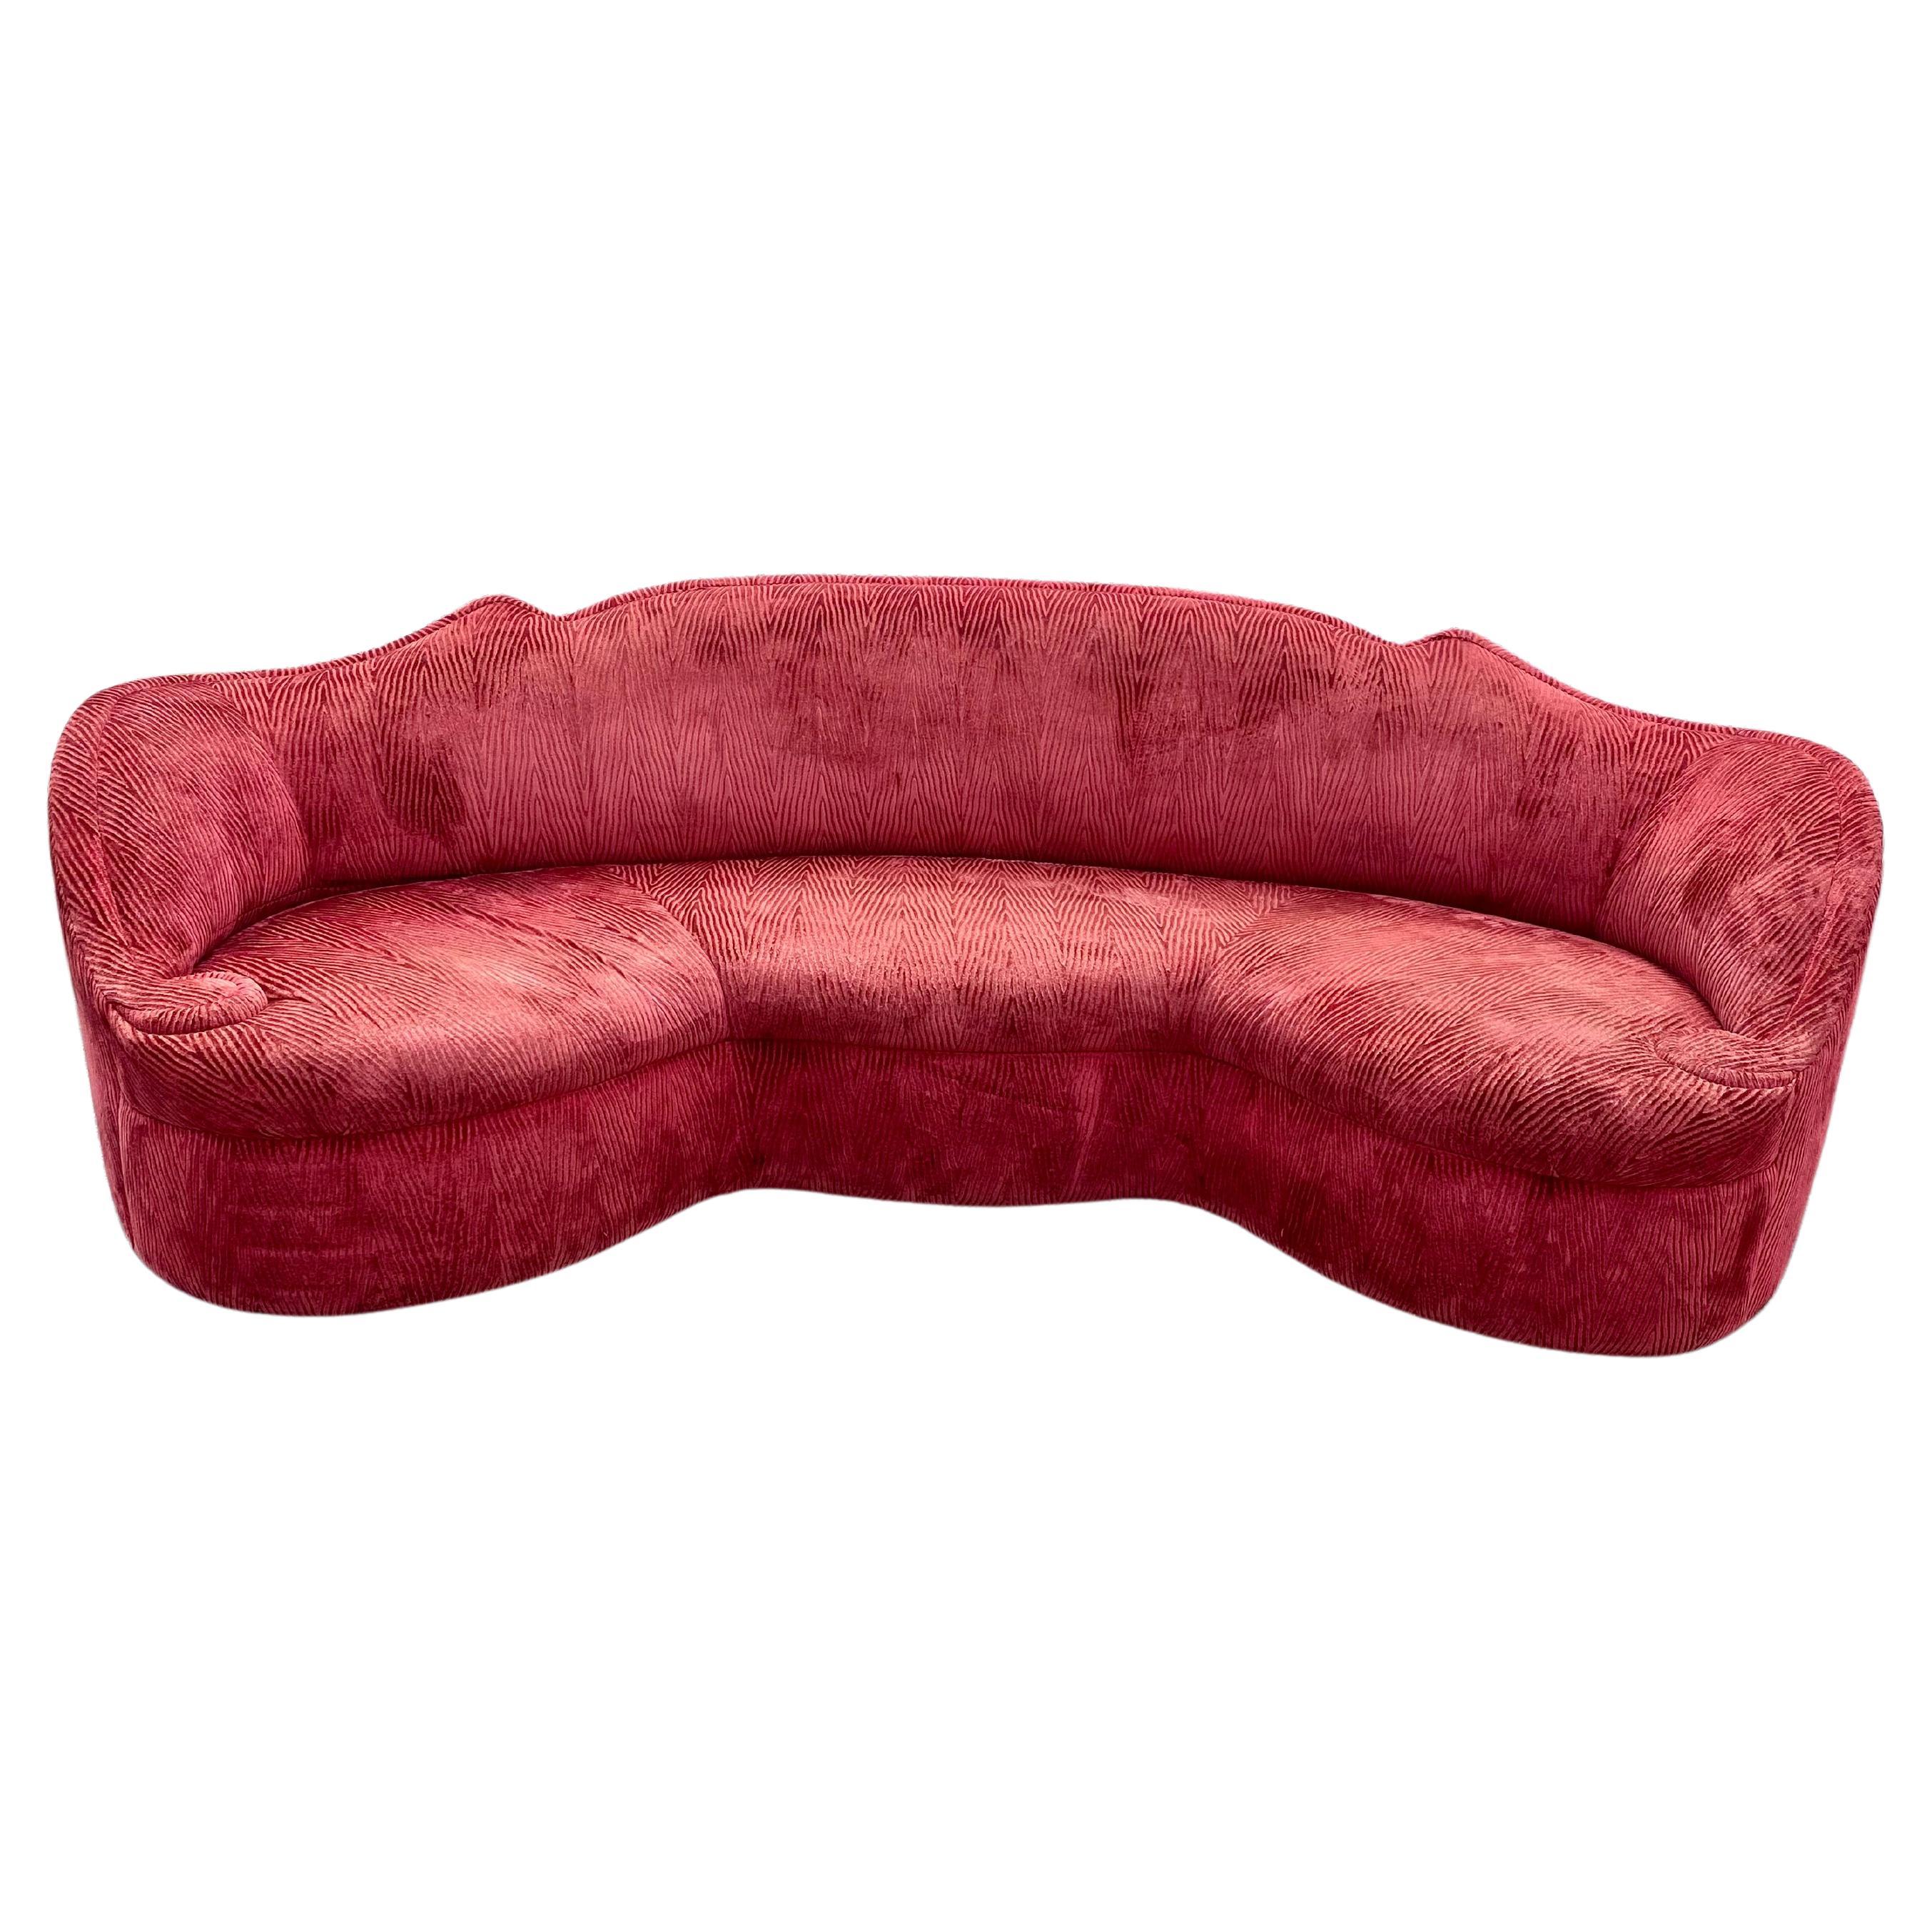 1970s Monumental Maroon Schiaparelli Velvet Curved Sofa